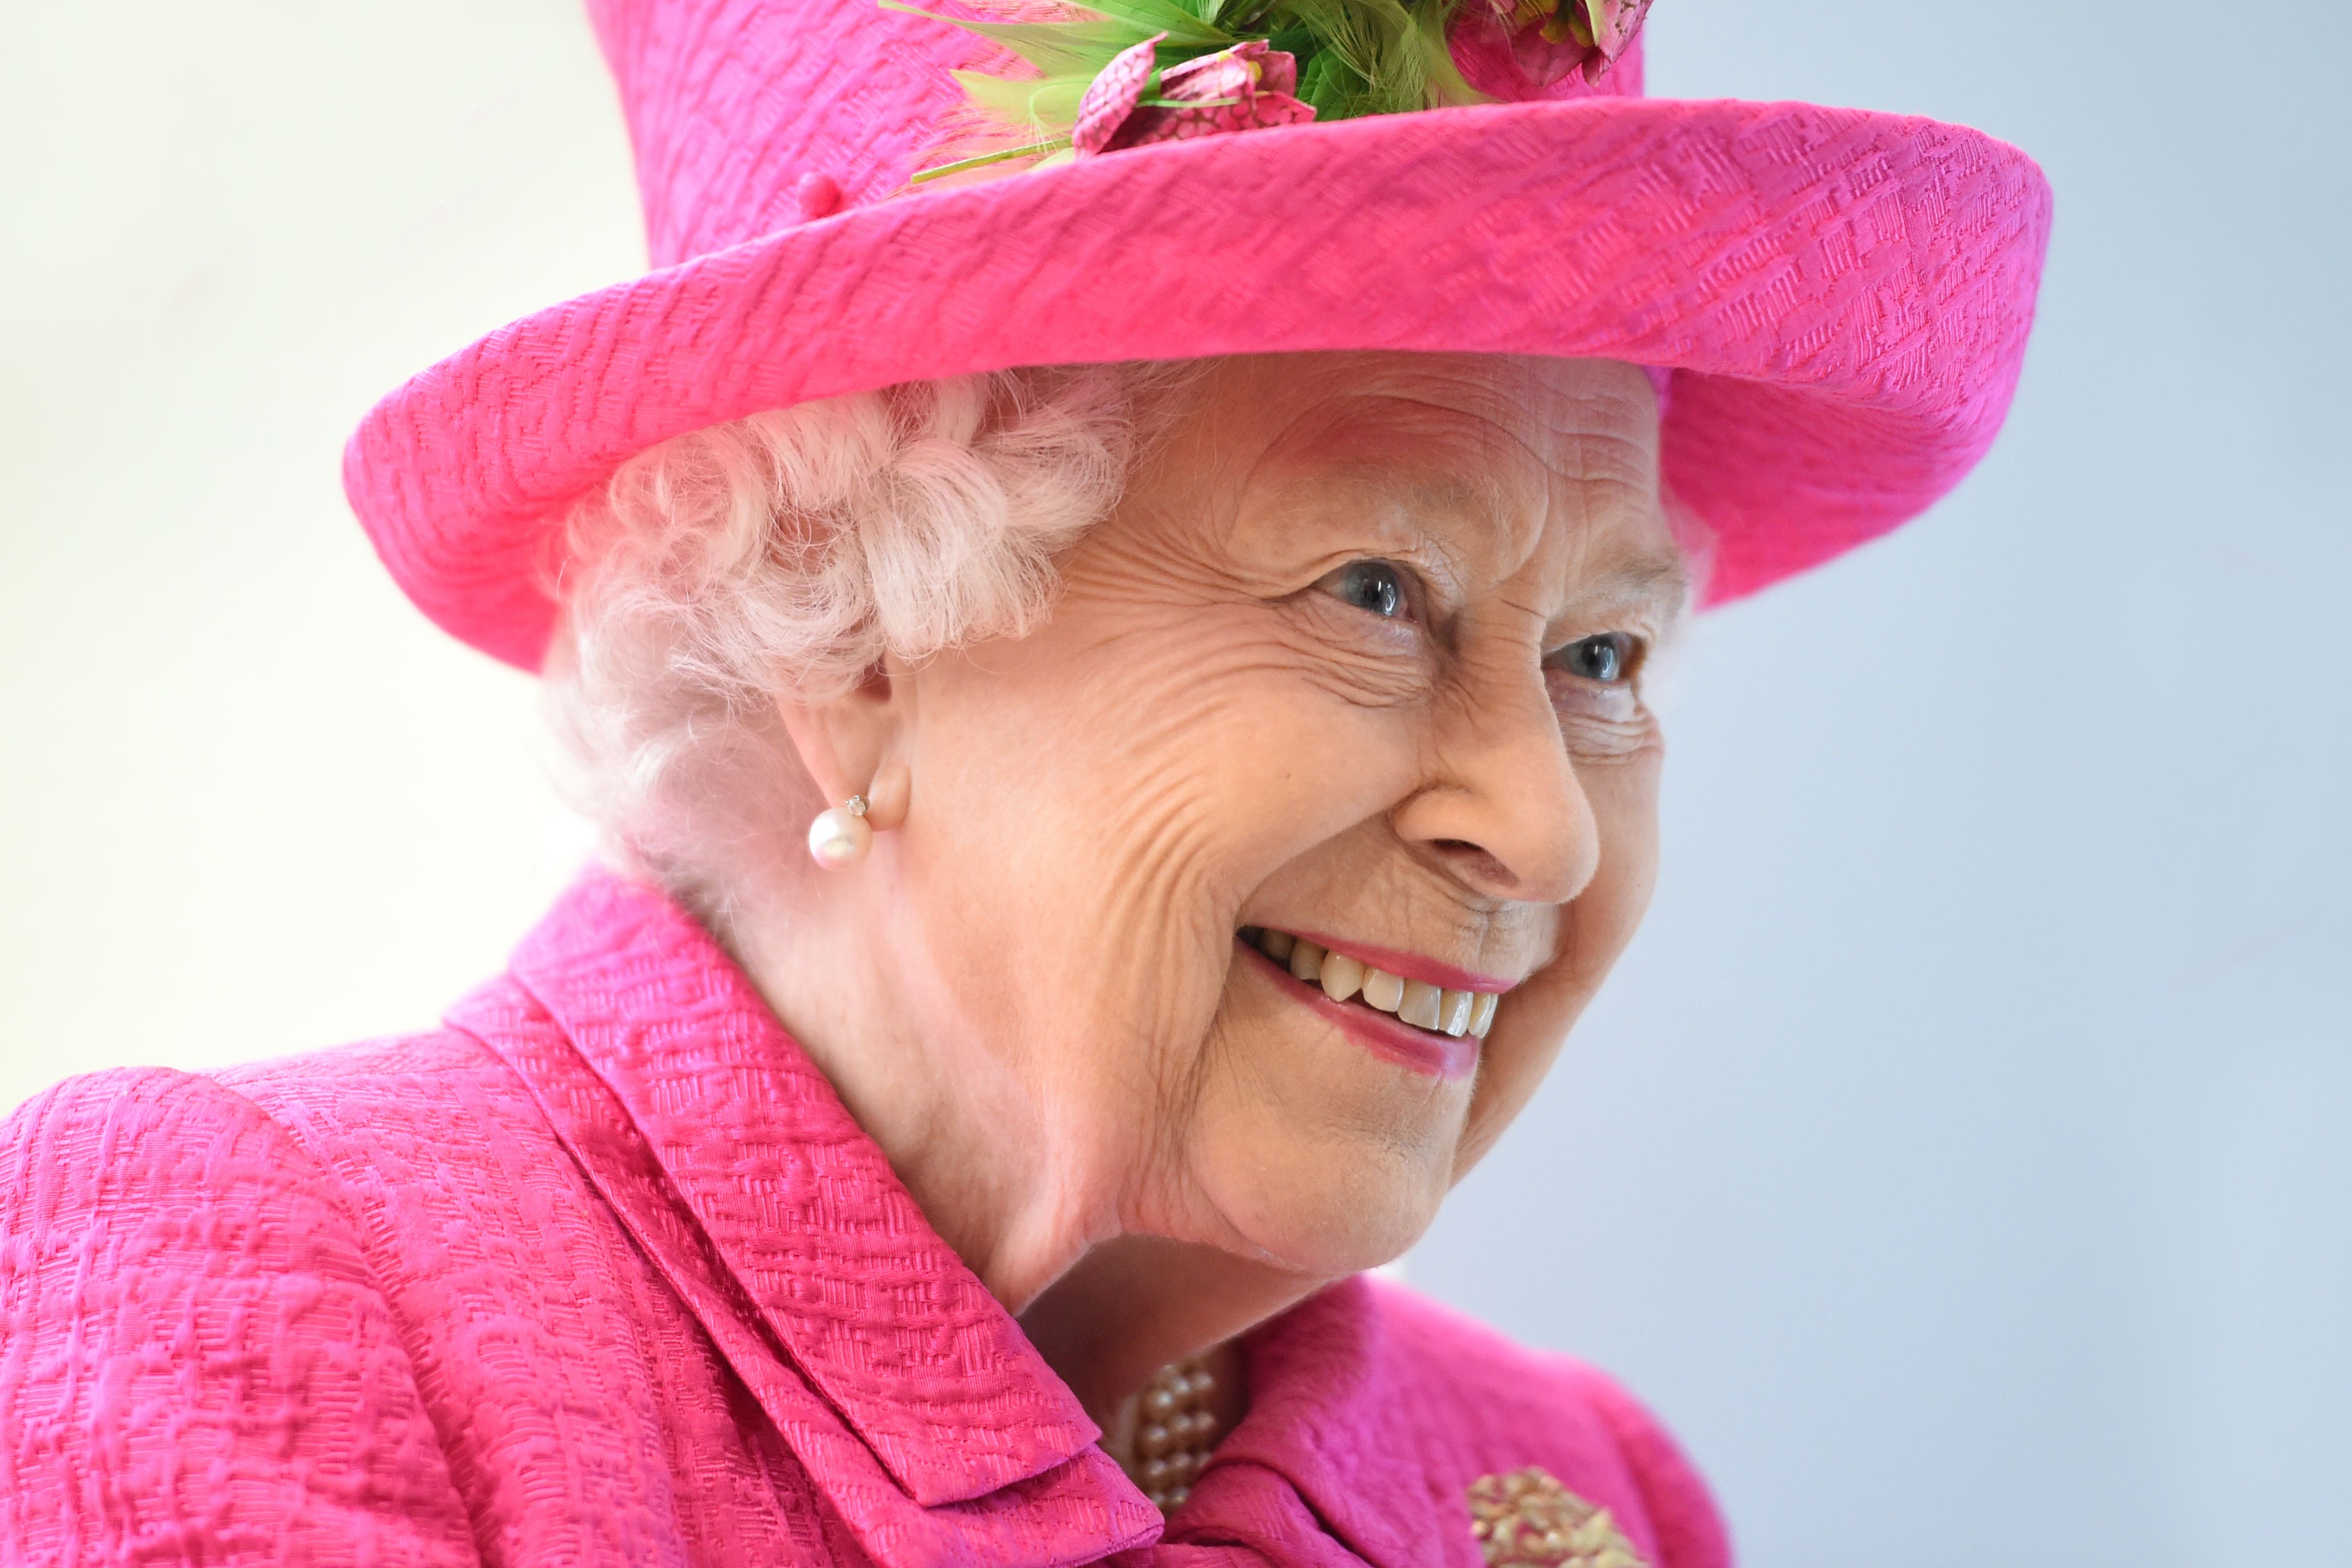 Britain's Queen Elizabeth II dies aged 96